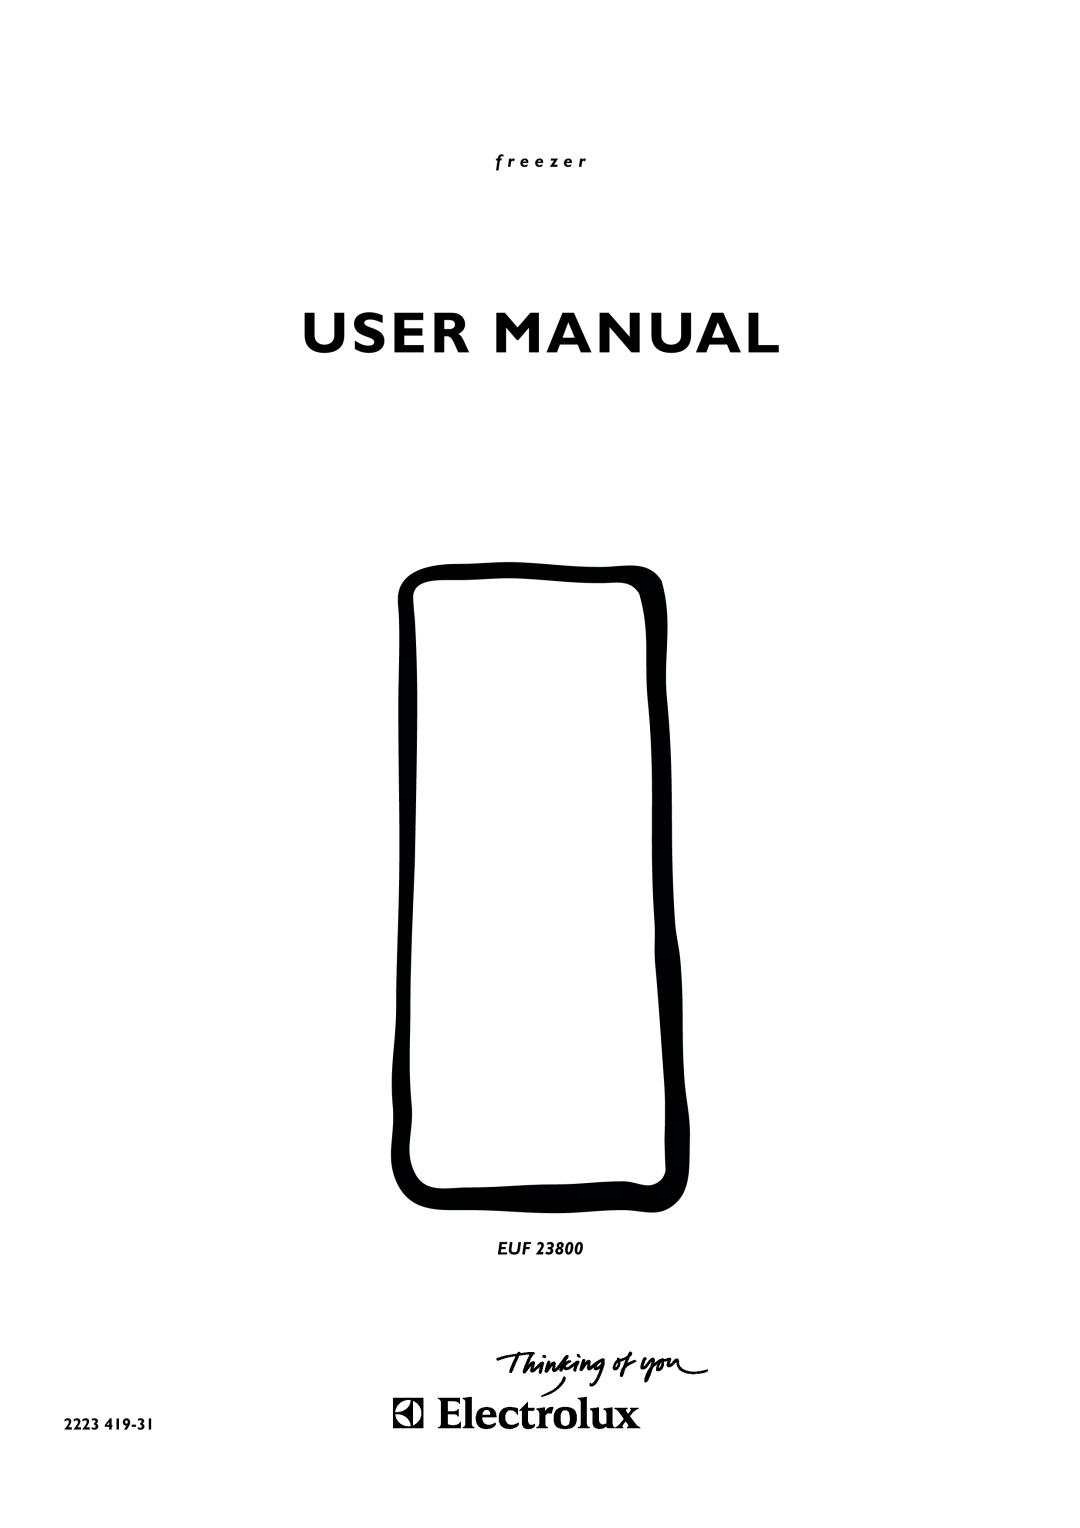 Electrolux EUF 23800 user manual User Manual, f r e e z e r, 2223 